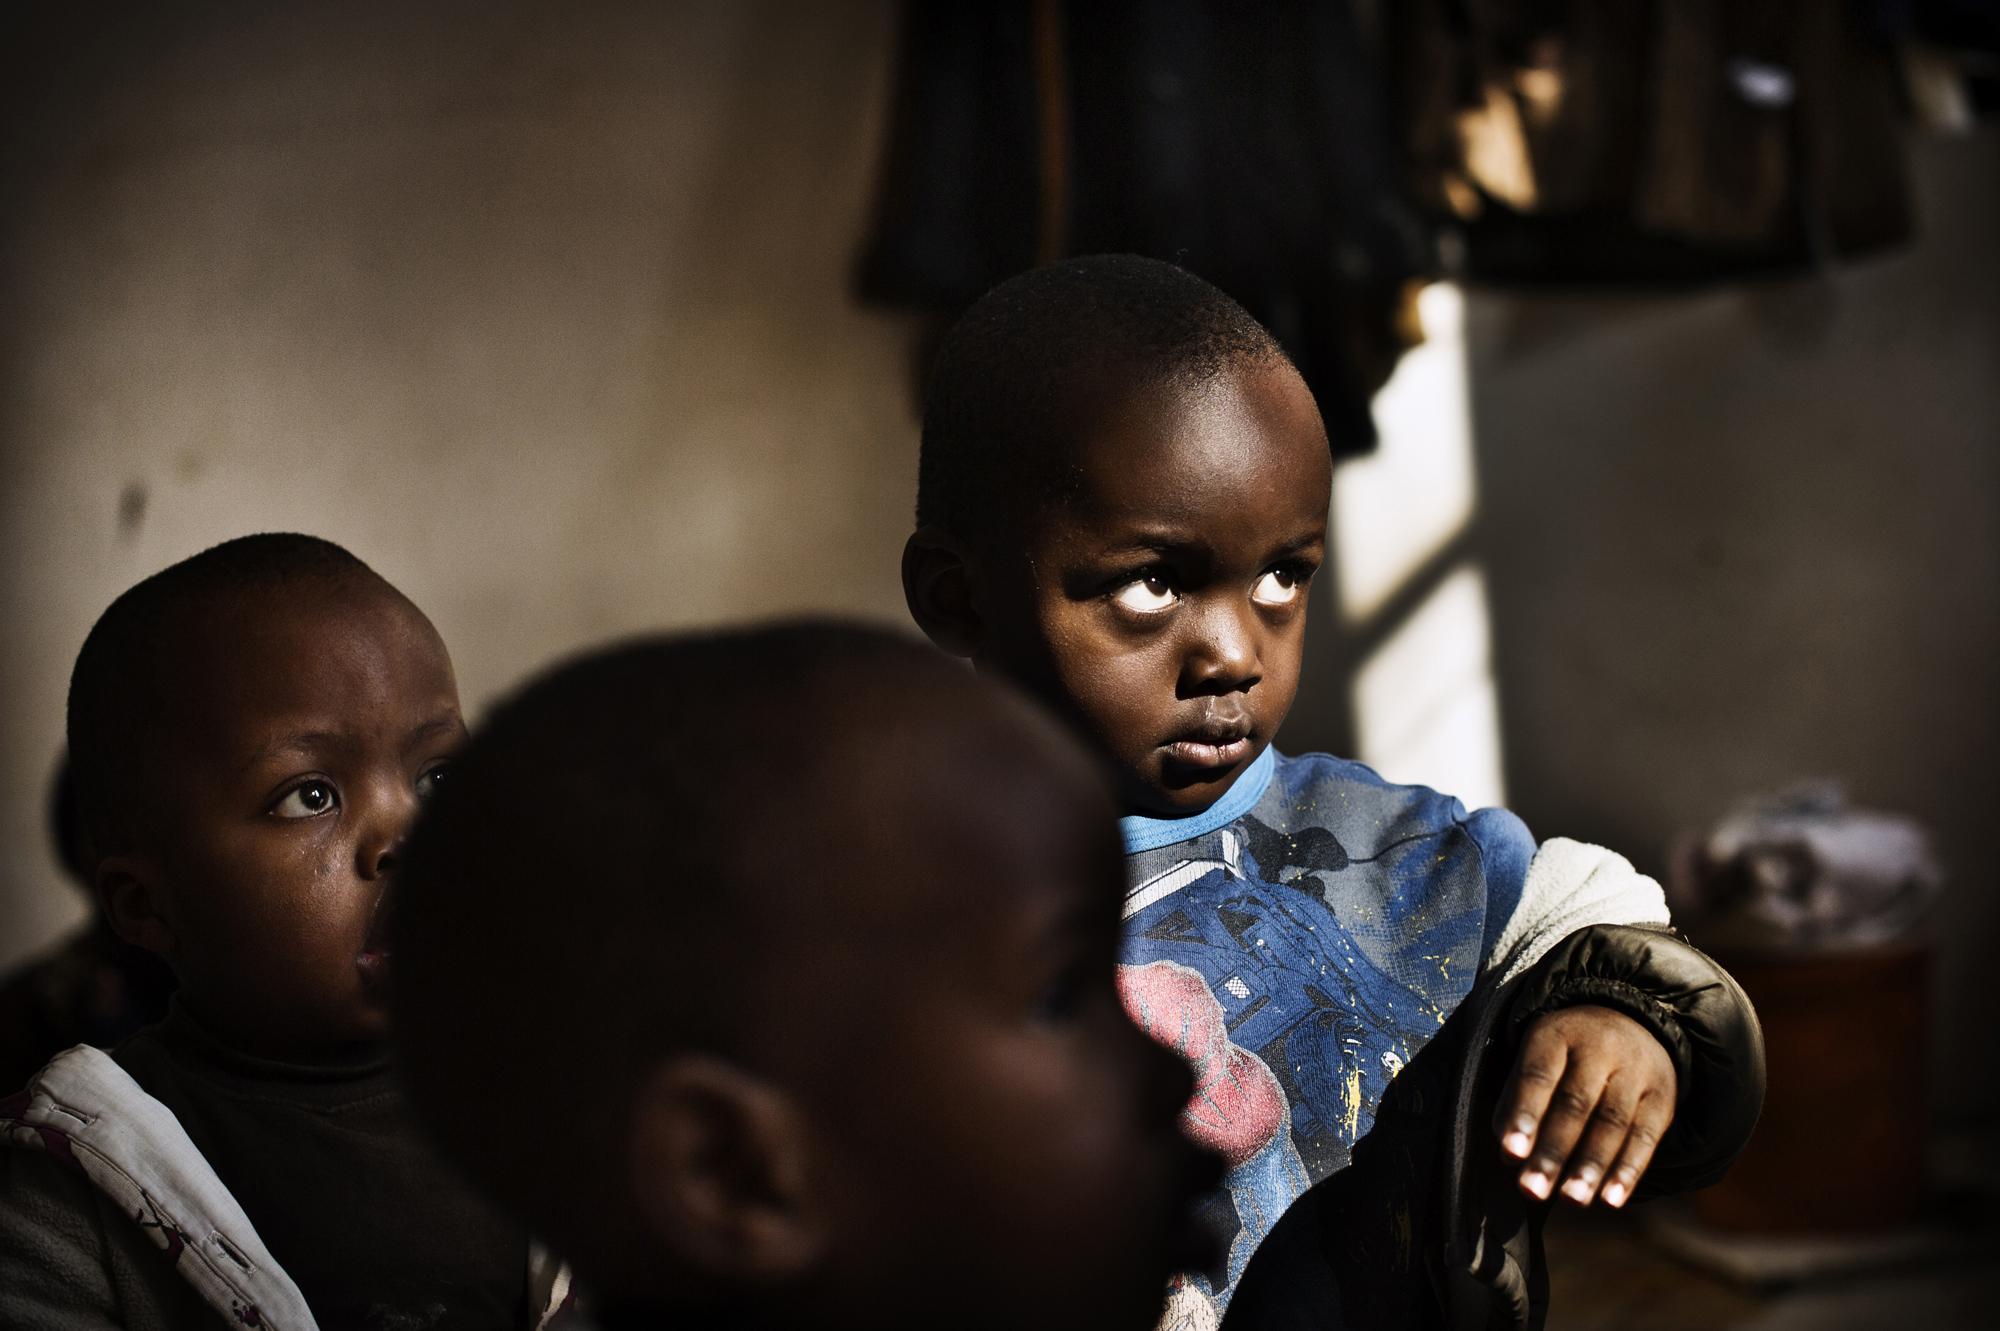 Children of the shadows - Johannesburg, South Africa.June 2012Children in the...